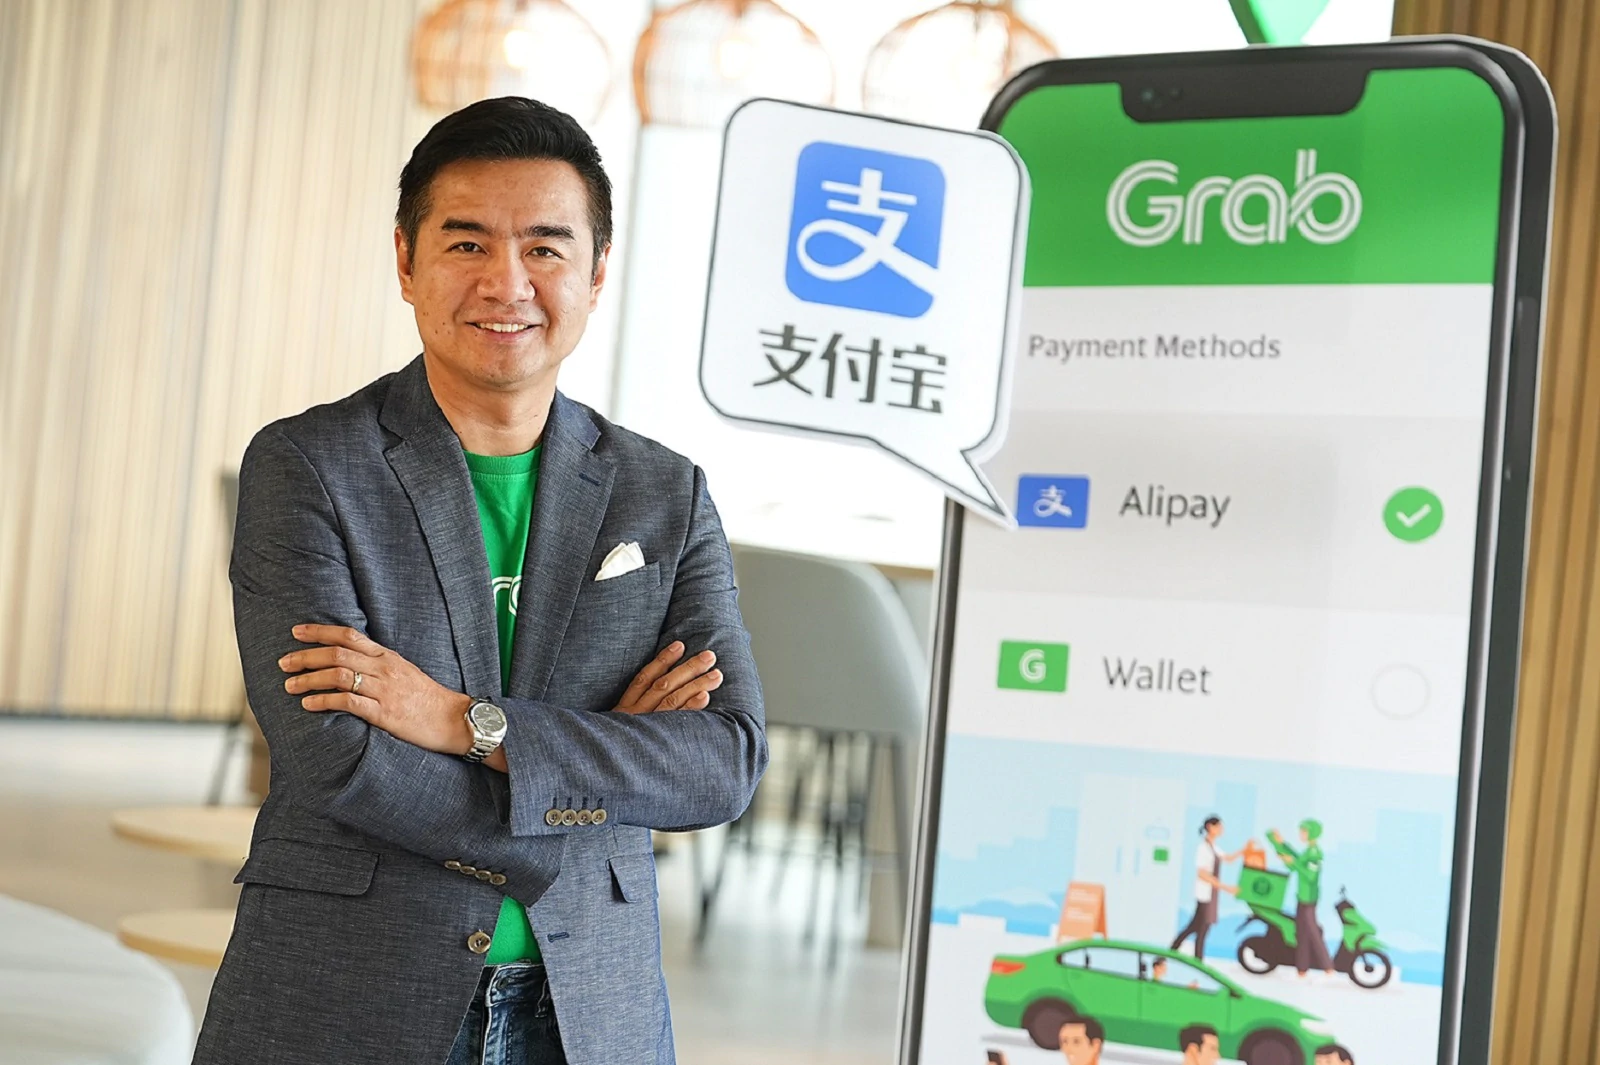 GrabCN 01 | Alipay | แกร็บ ลุยตลาดนักท่องเที่ยวจีน ผนึก Alipay เพิ่มช่องทางชำระเงิน